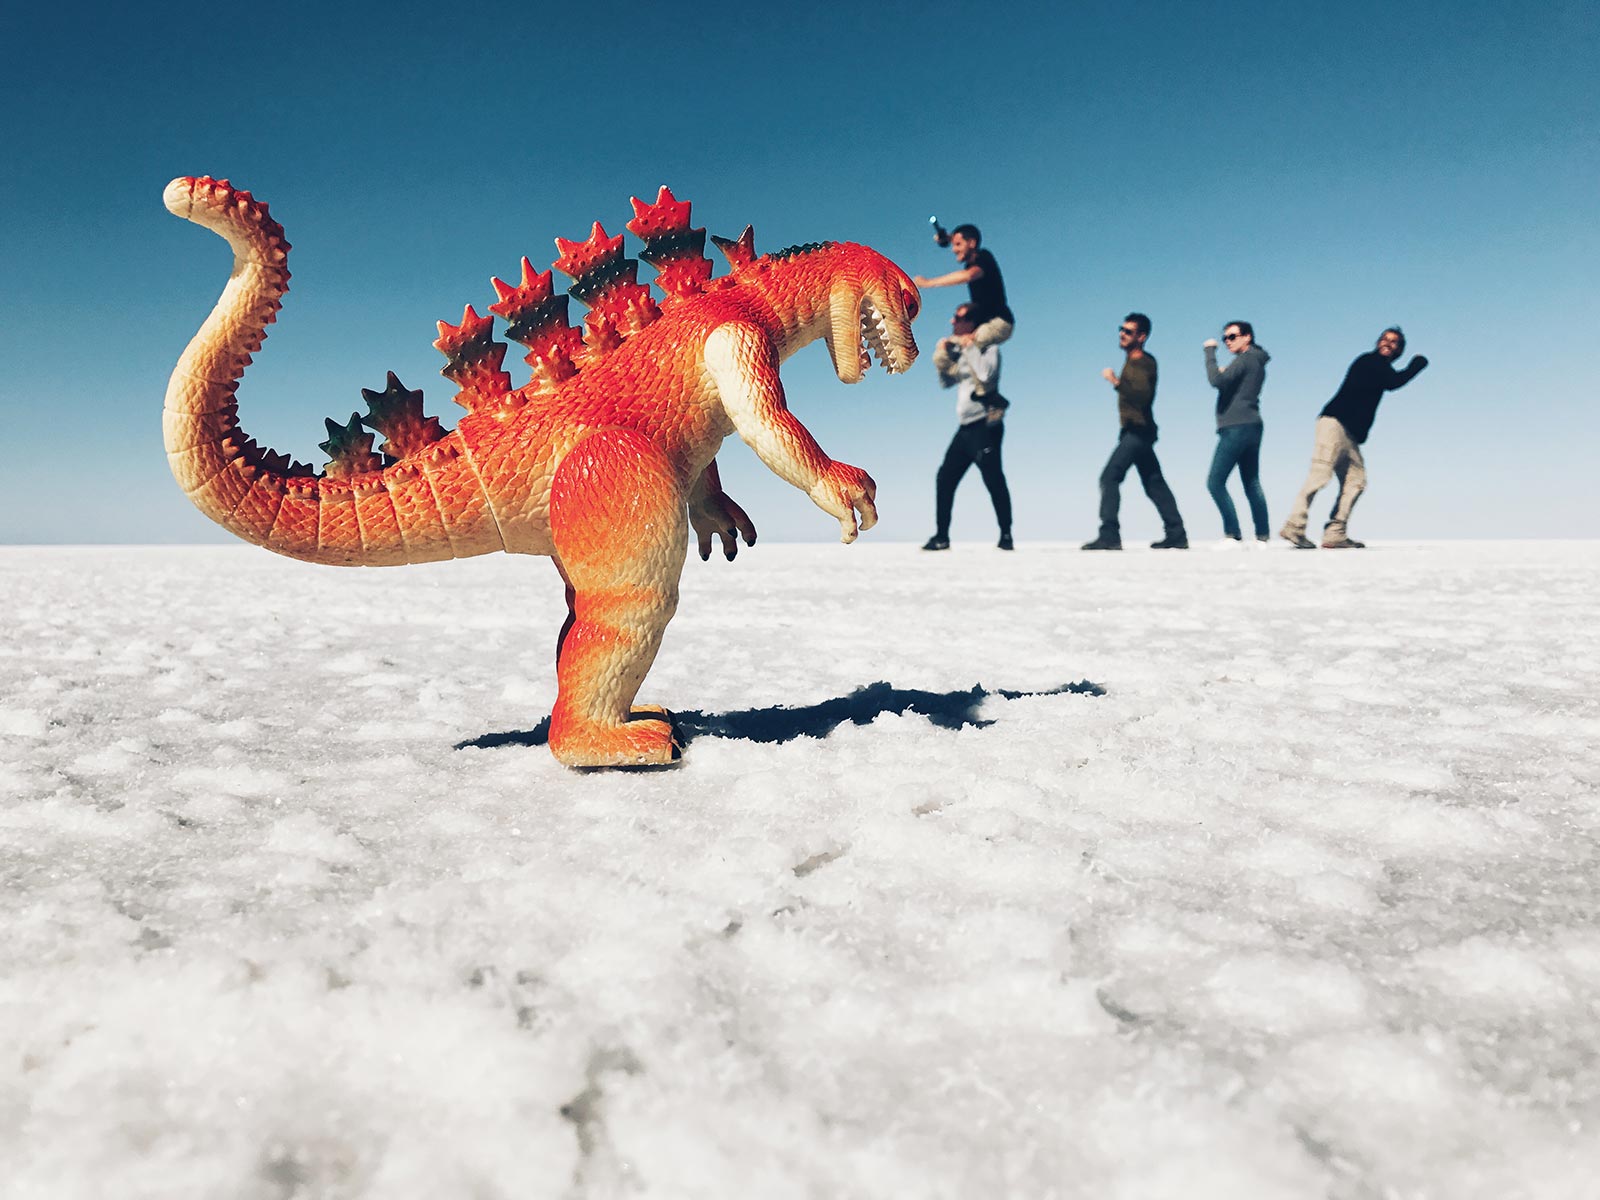 David Simpson and friends fighting Godzilla in Uyuni Salt Flat, Bolivia. Atacama desert & Bolivian salt flats road trip & full guide